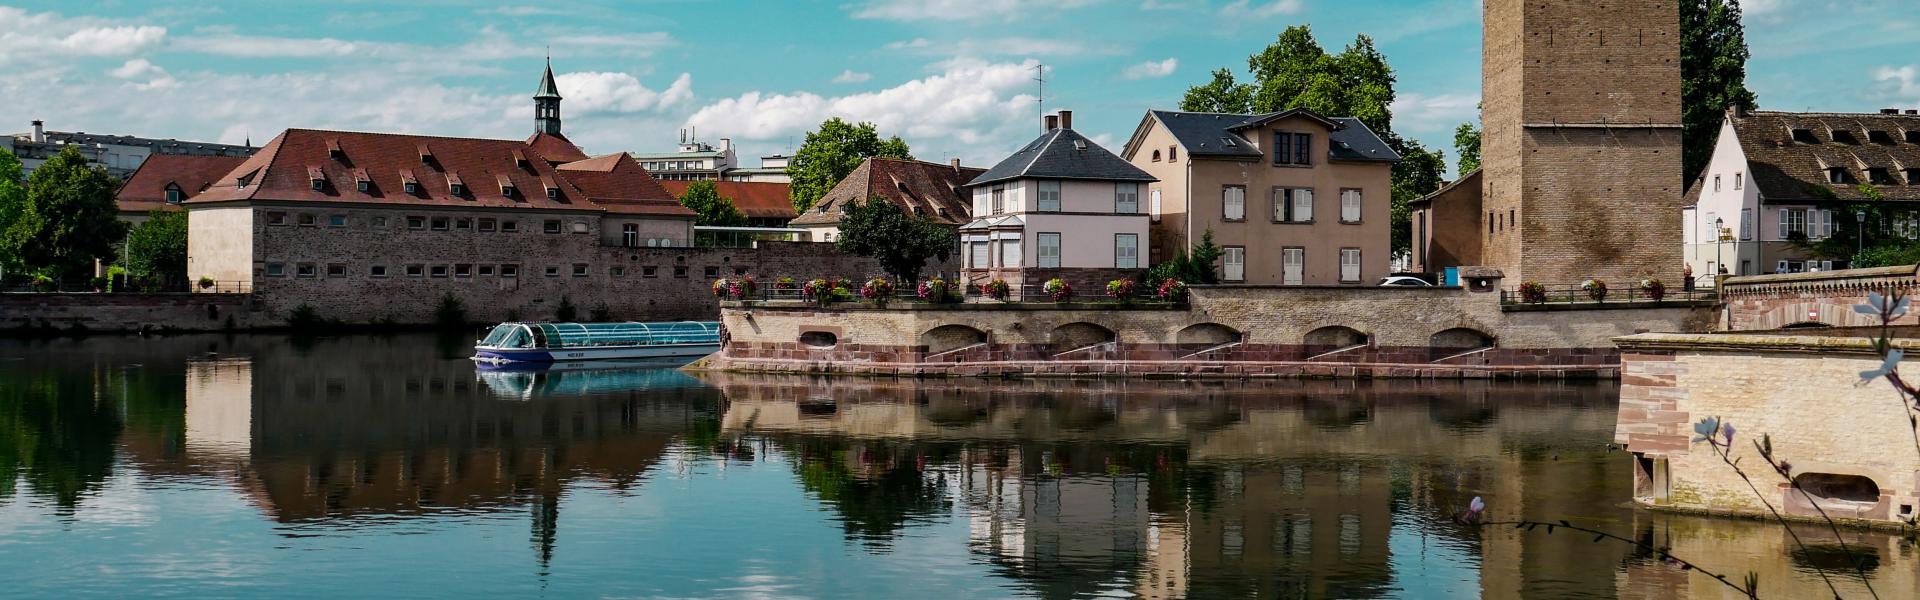 Location de vacances, Alsace - Vacances.com